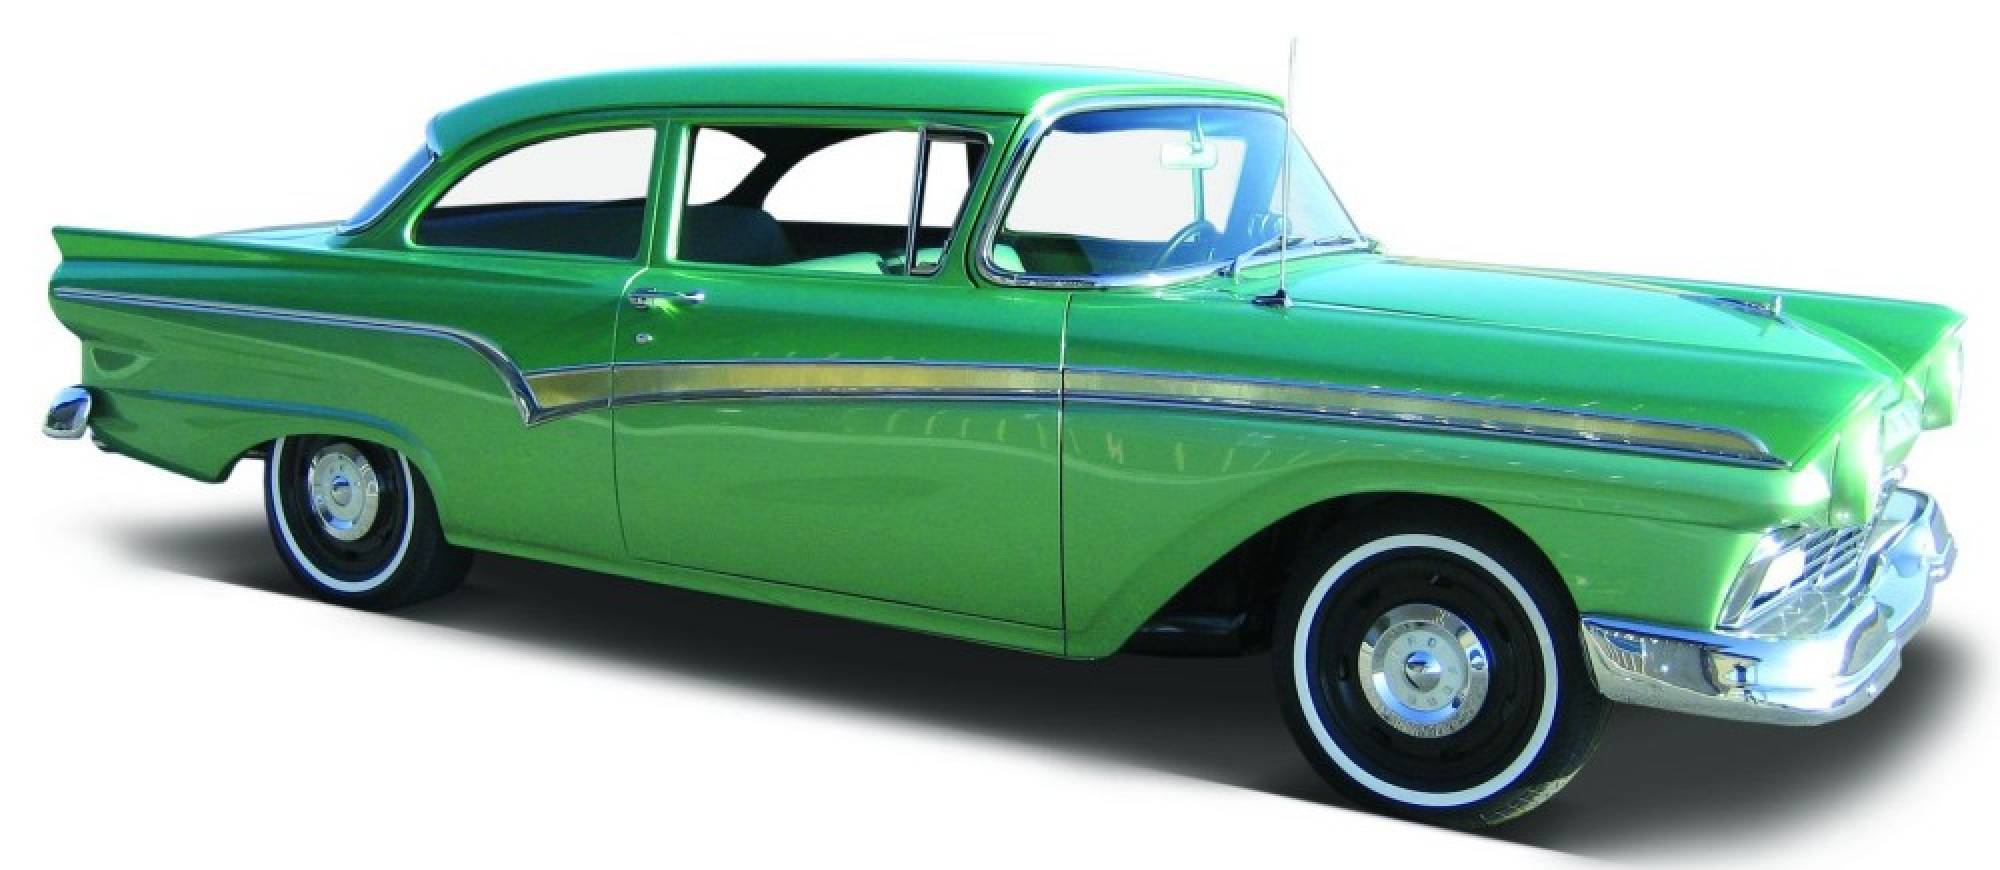 1957 Ford Custom HD wallpapers, Desktop wallpaper - most viewed